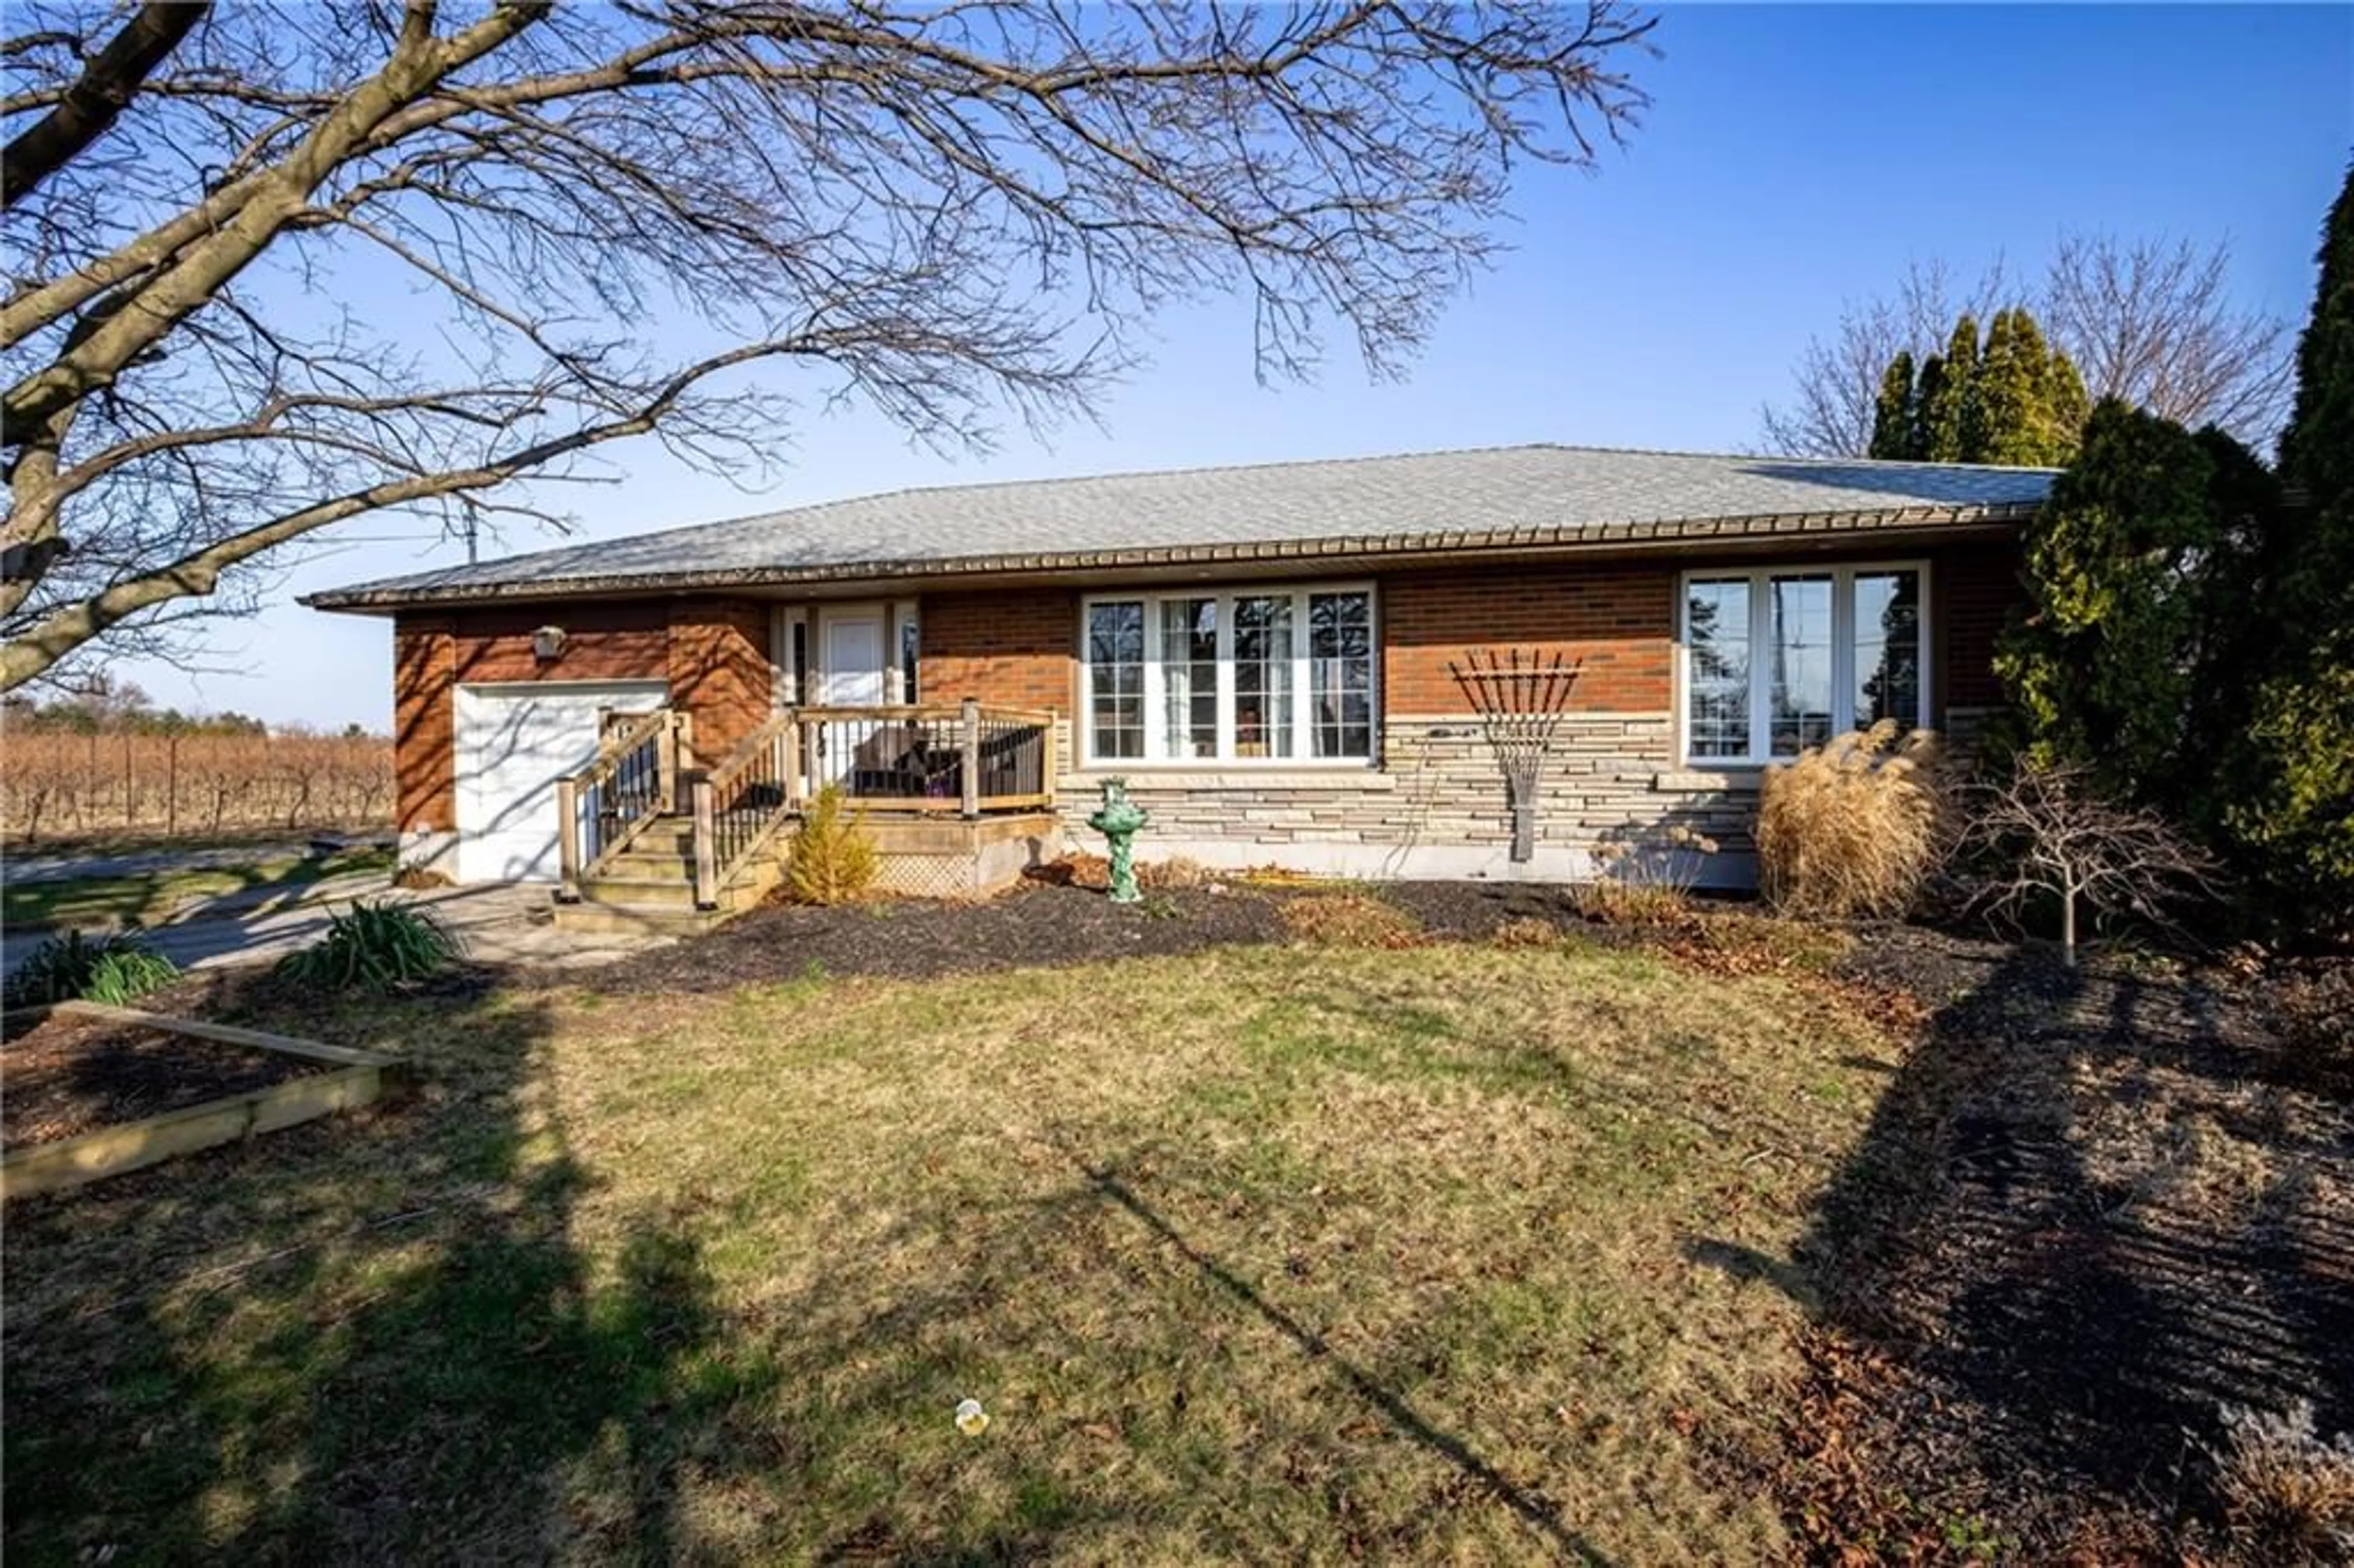 Home with brick exterior material for 1090 NIAGARA STONE Rd, Niagara-on-the-Lake Ontario L0S 1J0